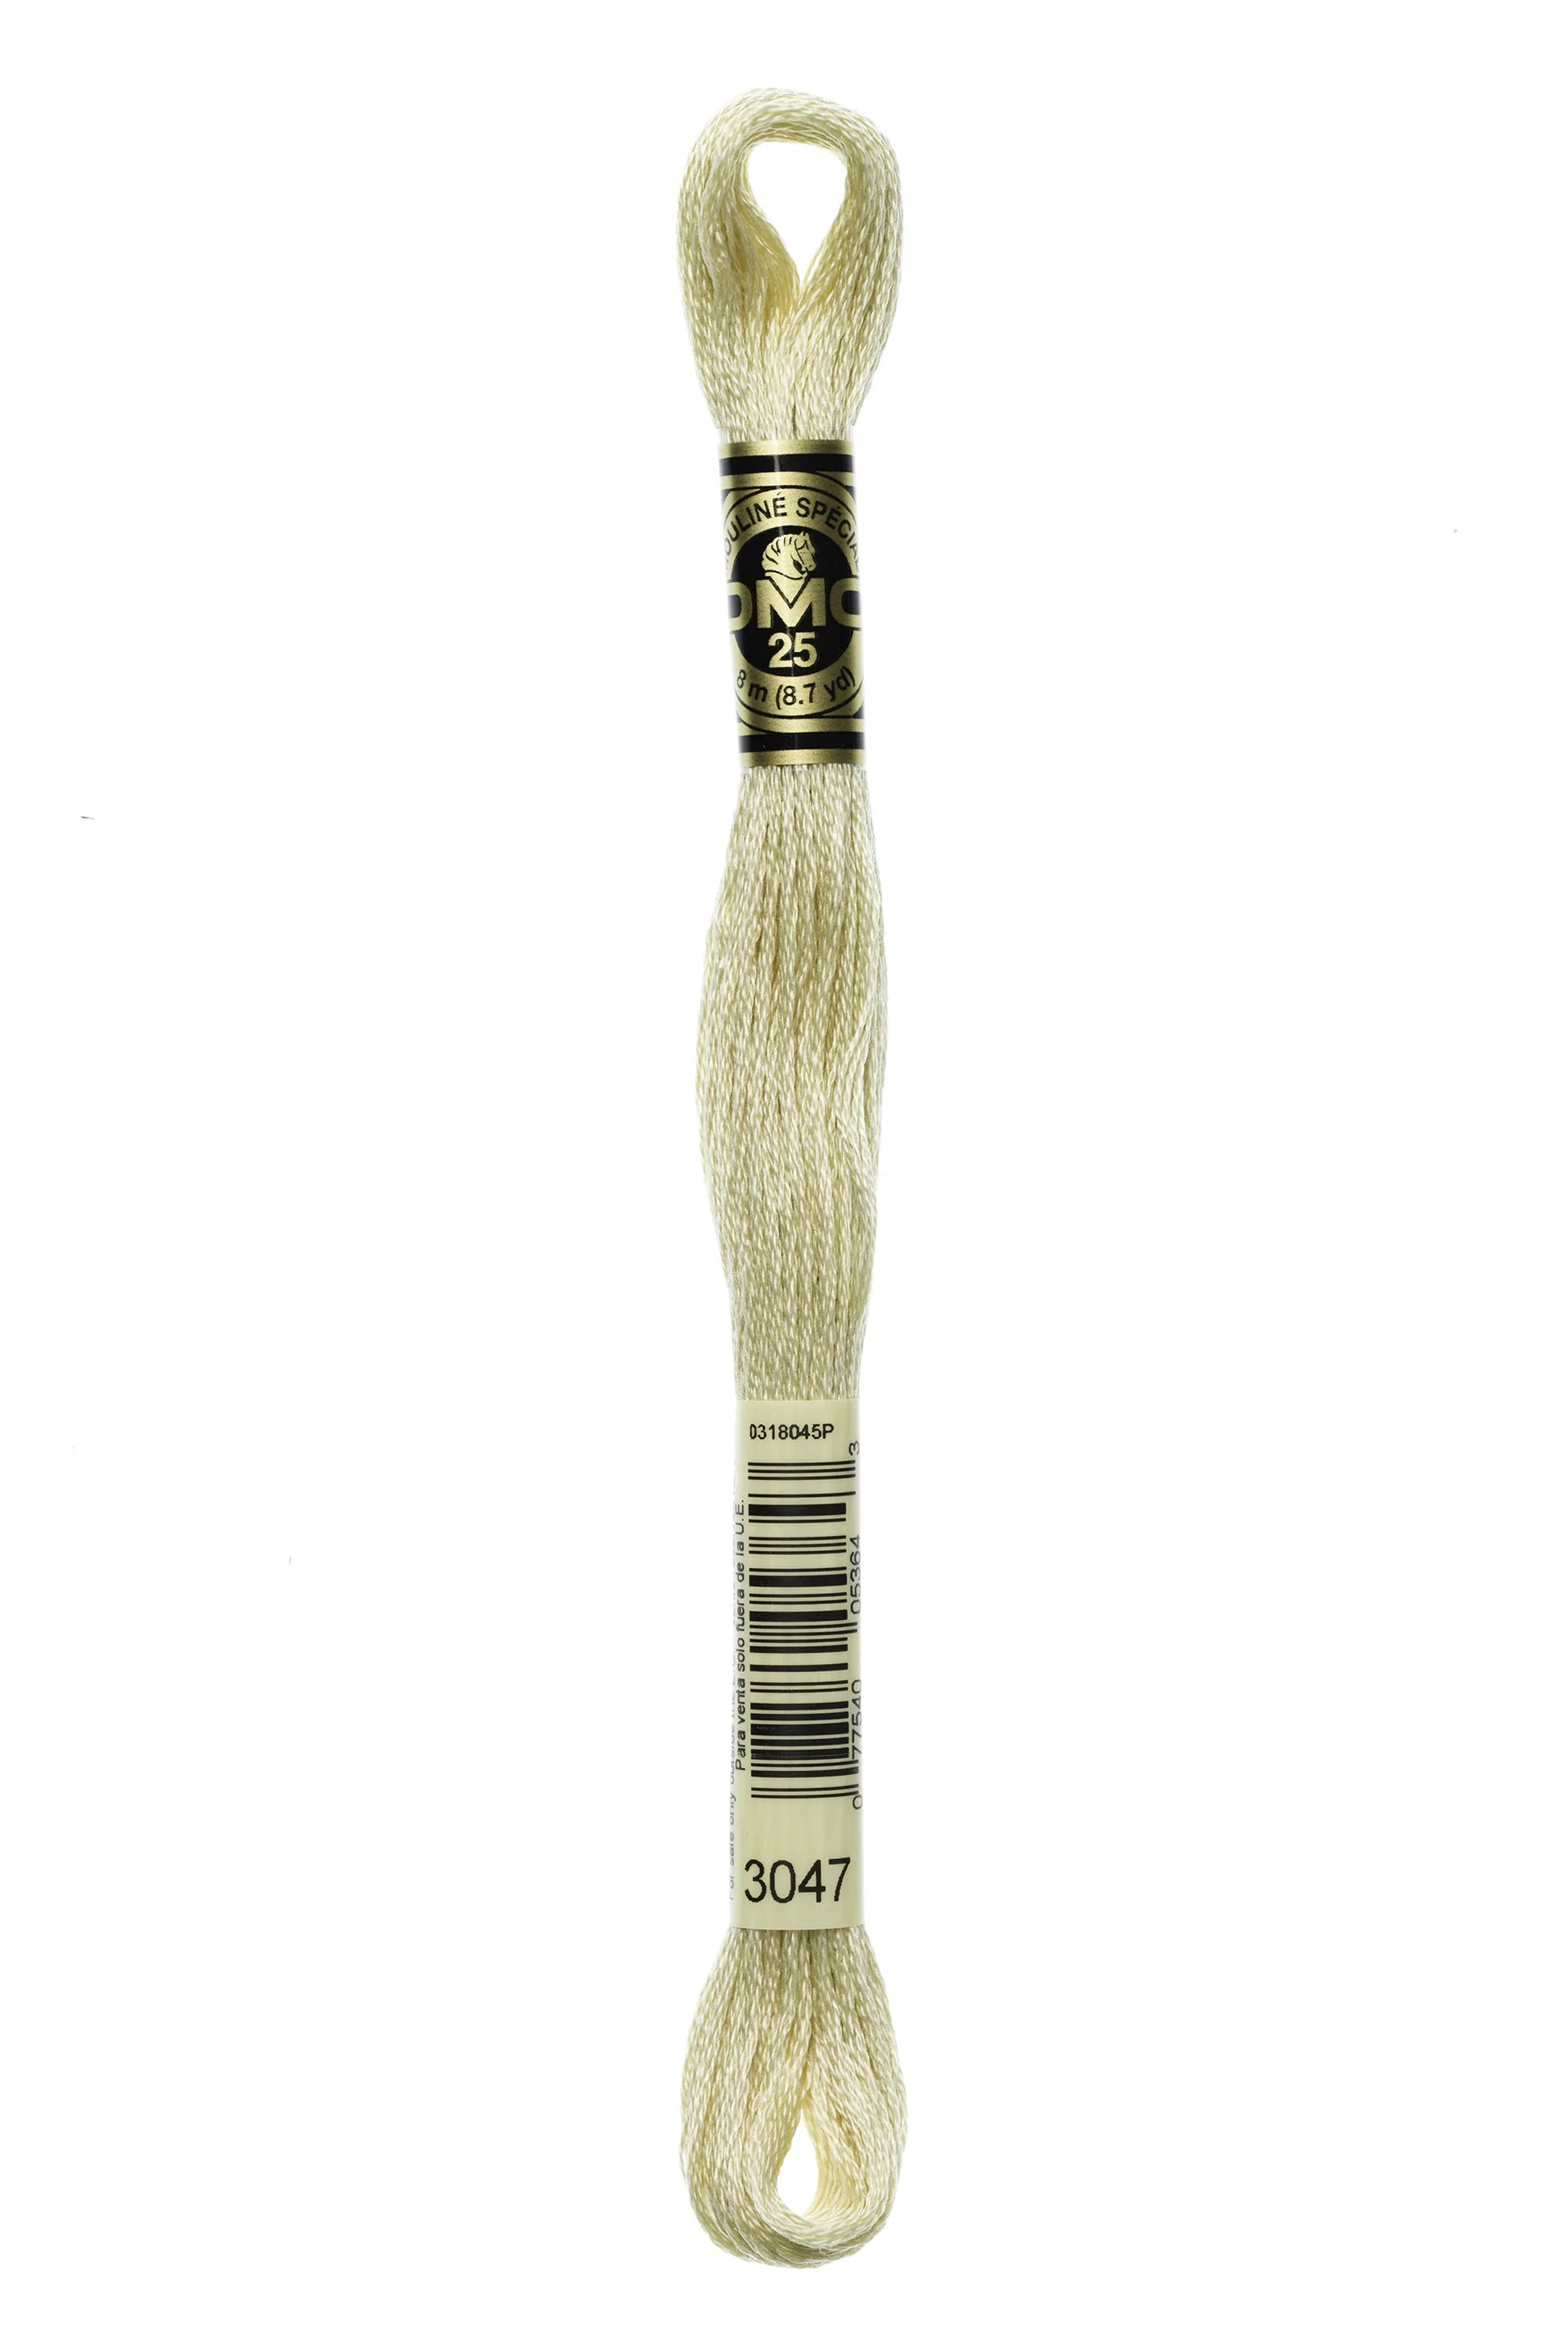 DMC 3047 - Yellow Beige - Light - DMC 6 Strand Embroidery Thread, Thread & Floss, Thread & Floss, The Crafty Grimalkin - A Cross Stitch Store